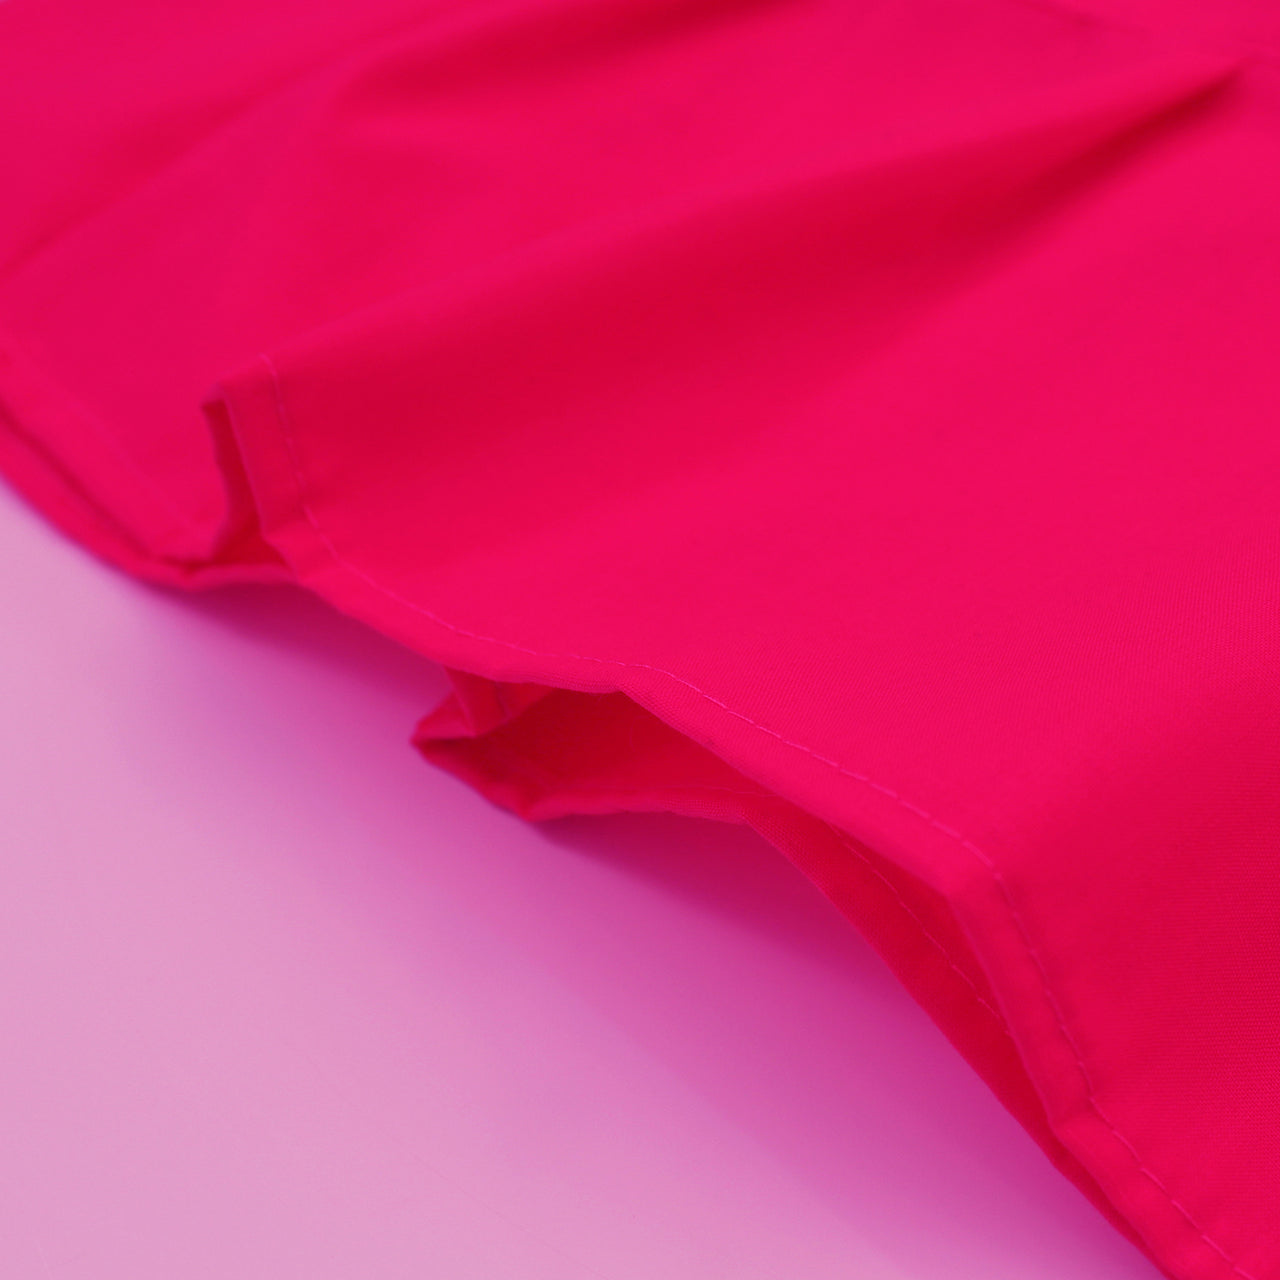 Cerise Pink - Sari (Saree) Petticoat - Available in S, M, L & XL - Underskirts For Sari's